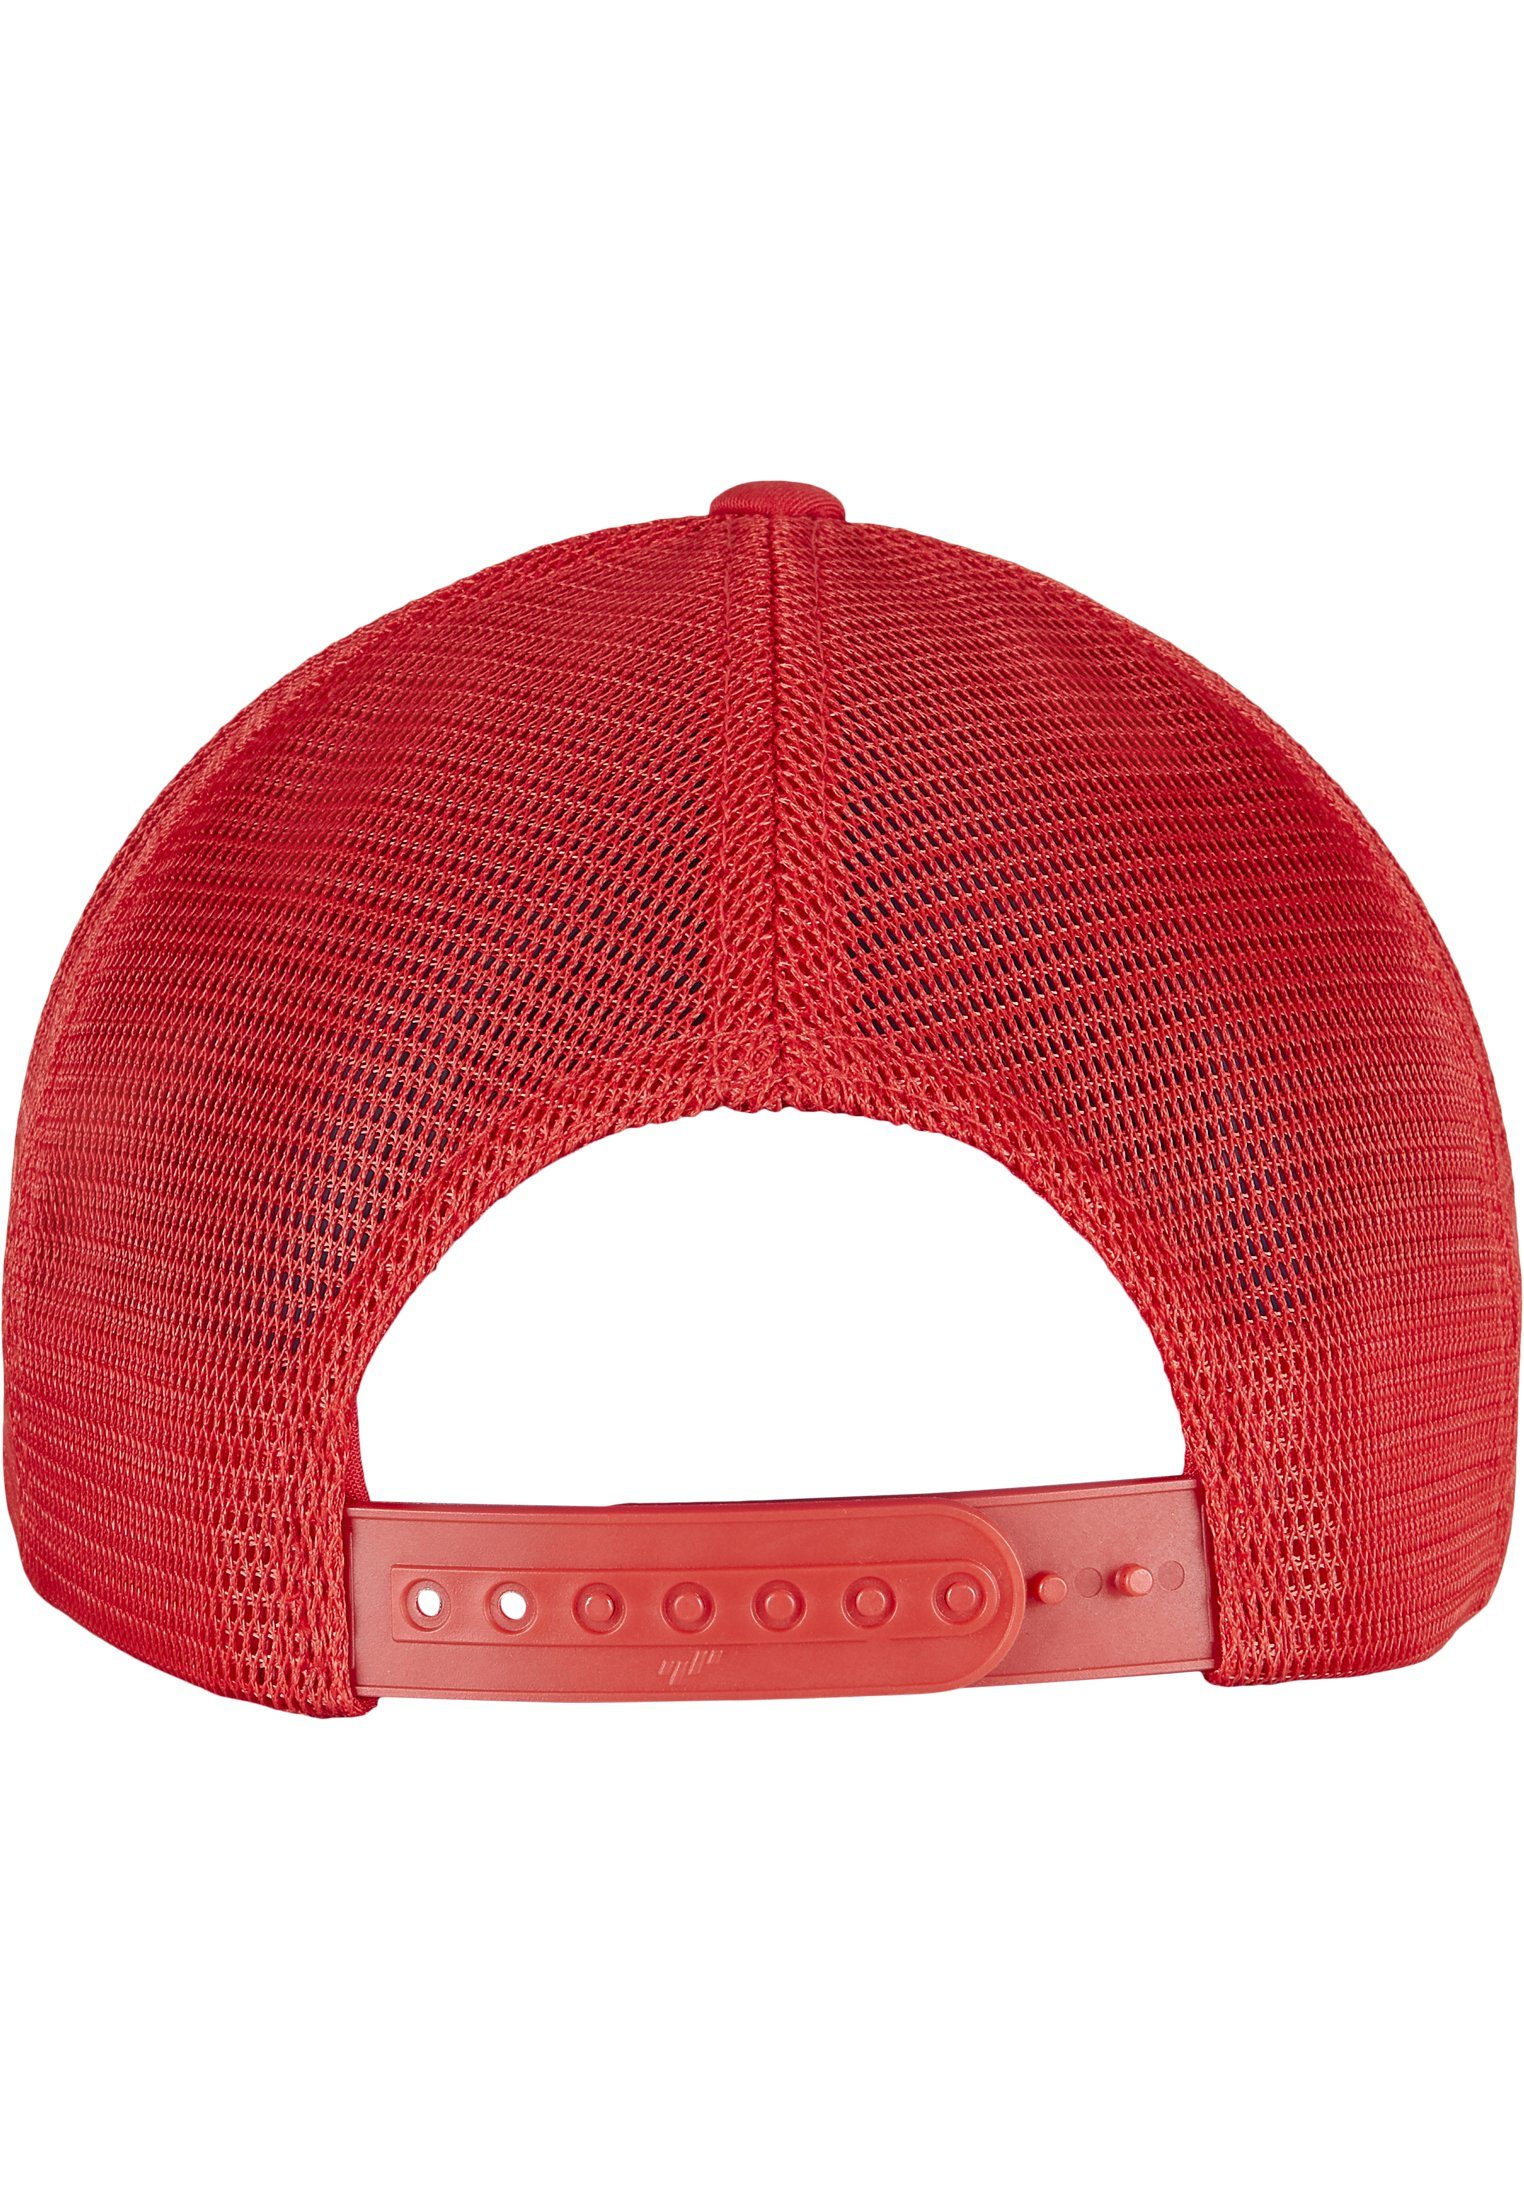 Flex Cap Cap Accessoires red Omnimesh Flexfit 360°